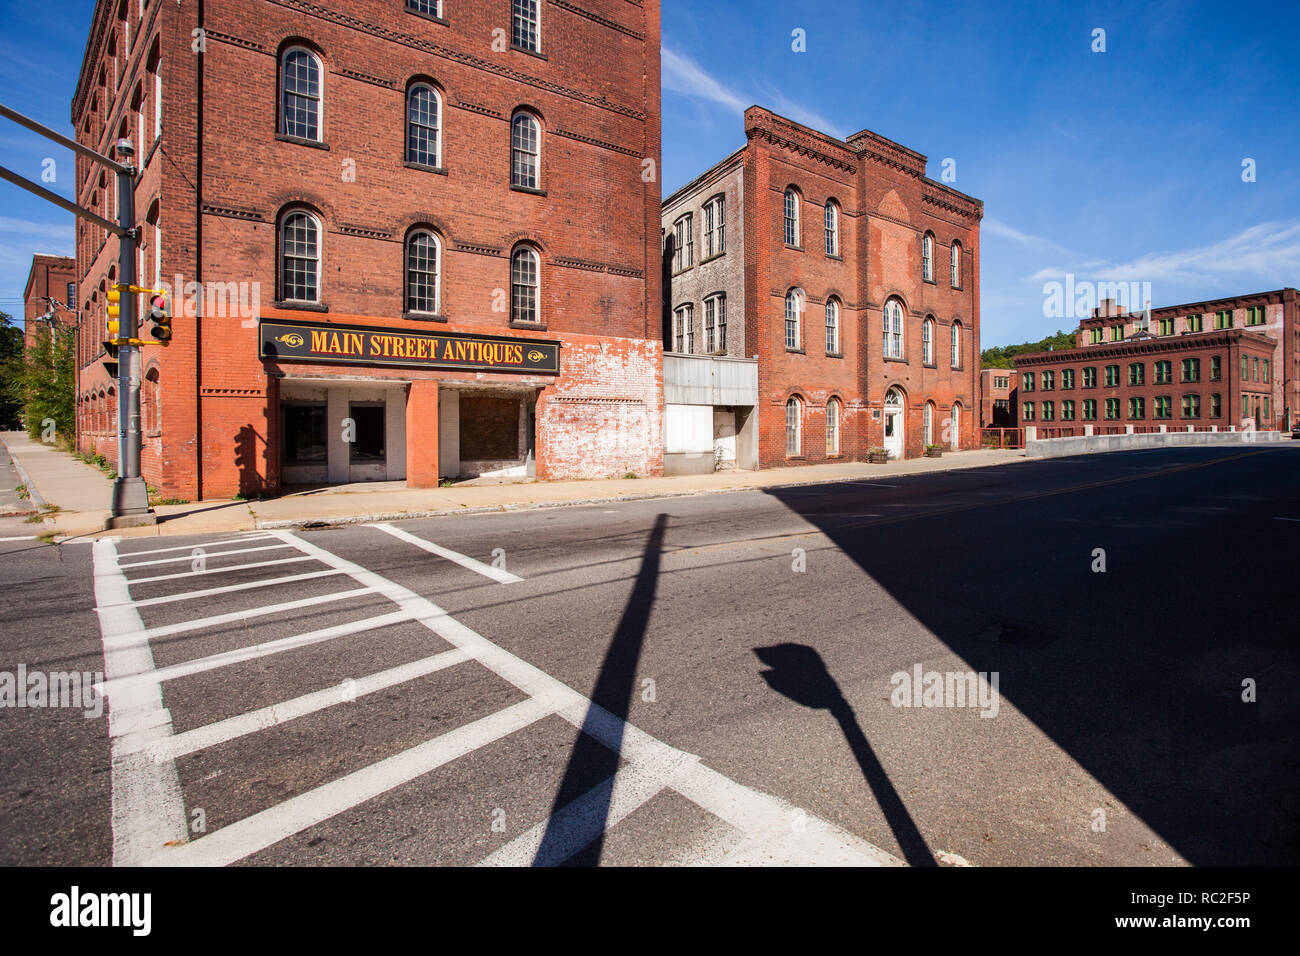 Main Street Antiques building in Orange, Massachusetts, now closed Stock Photo